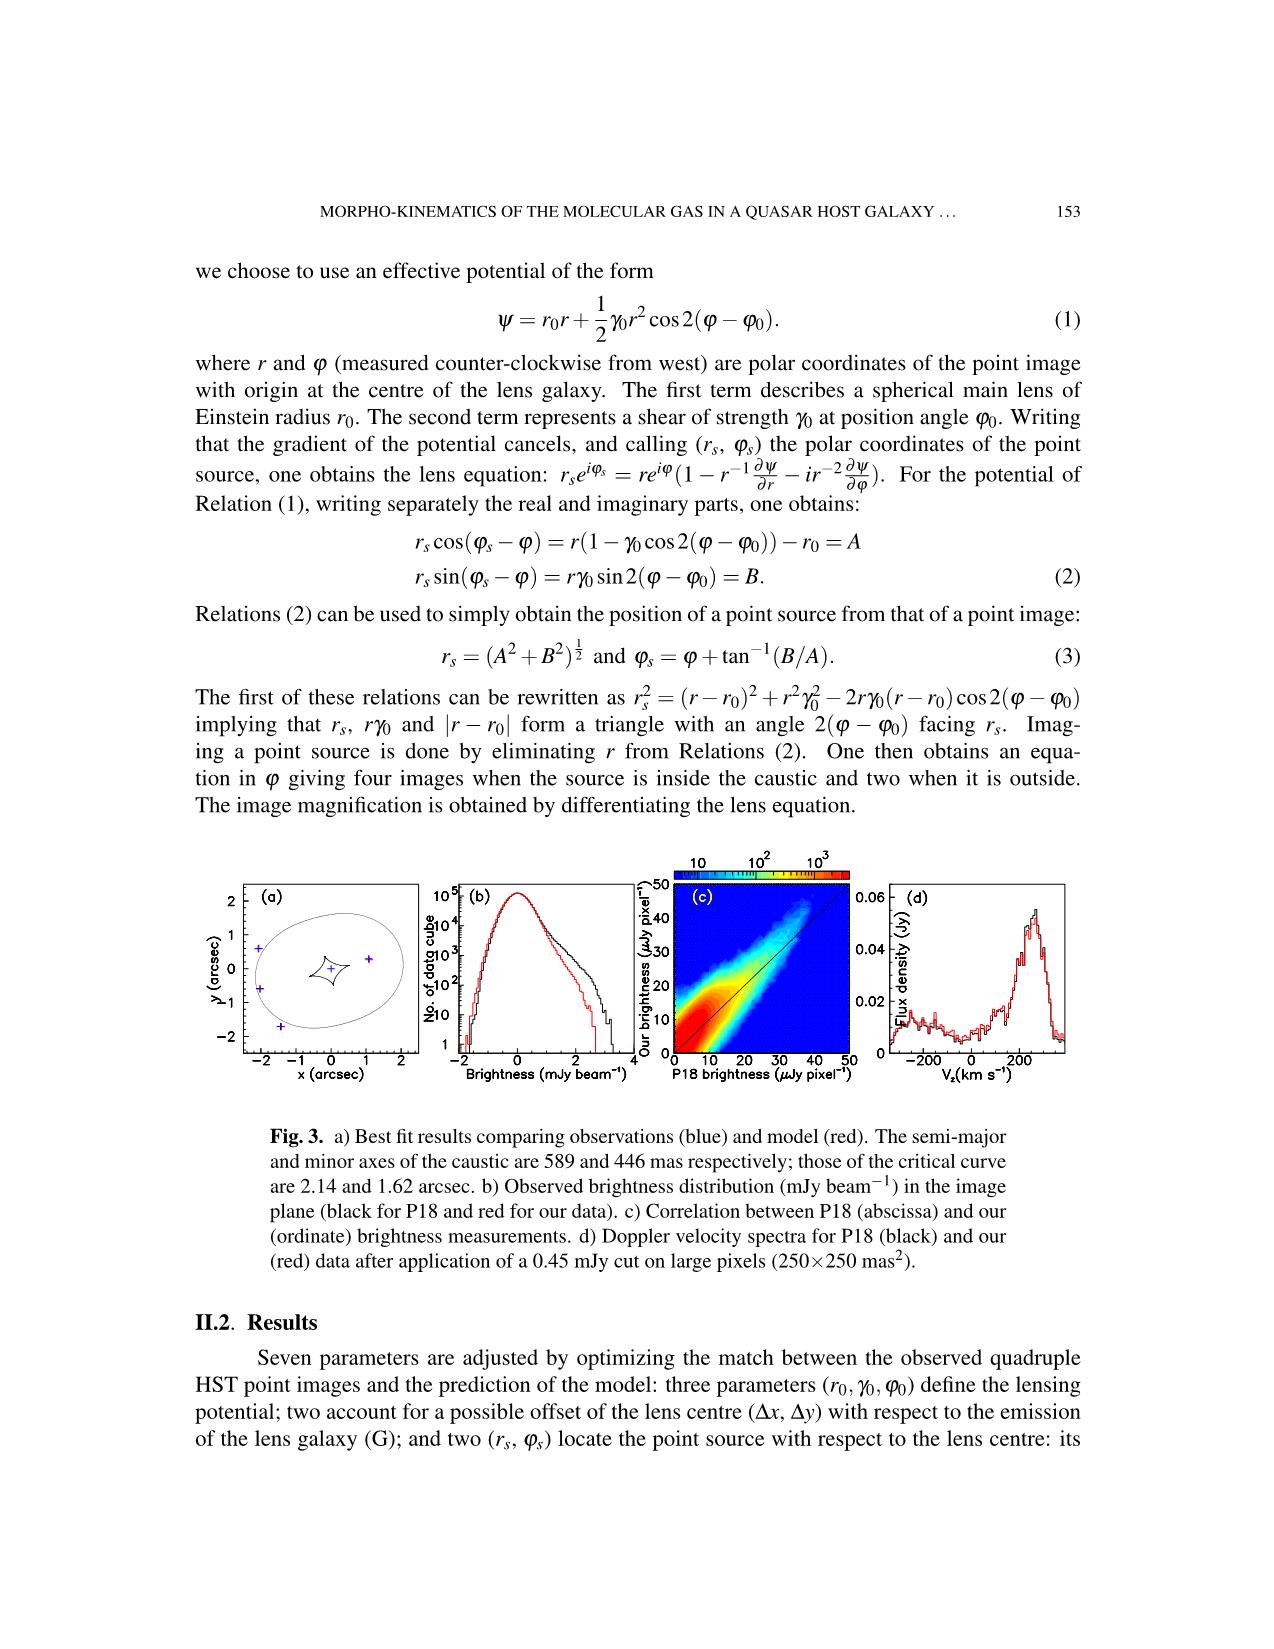 Morpho-Kinematics of the molecular gas in a quasar host galaxy at redshift z = 0:654 trang 5